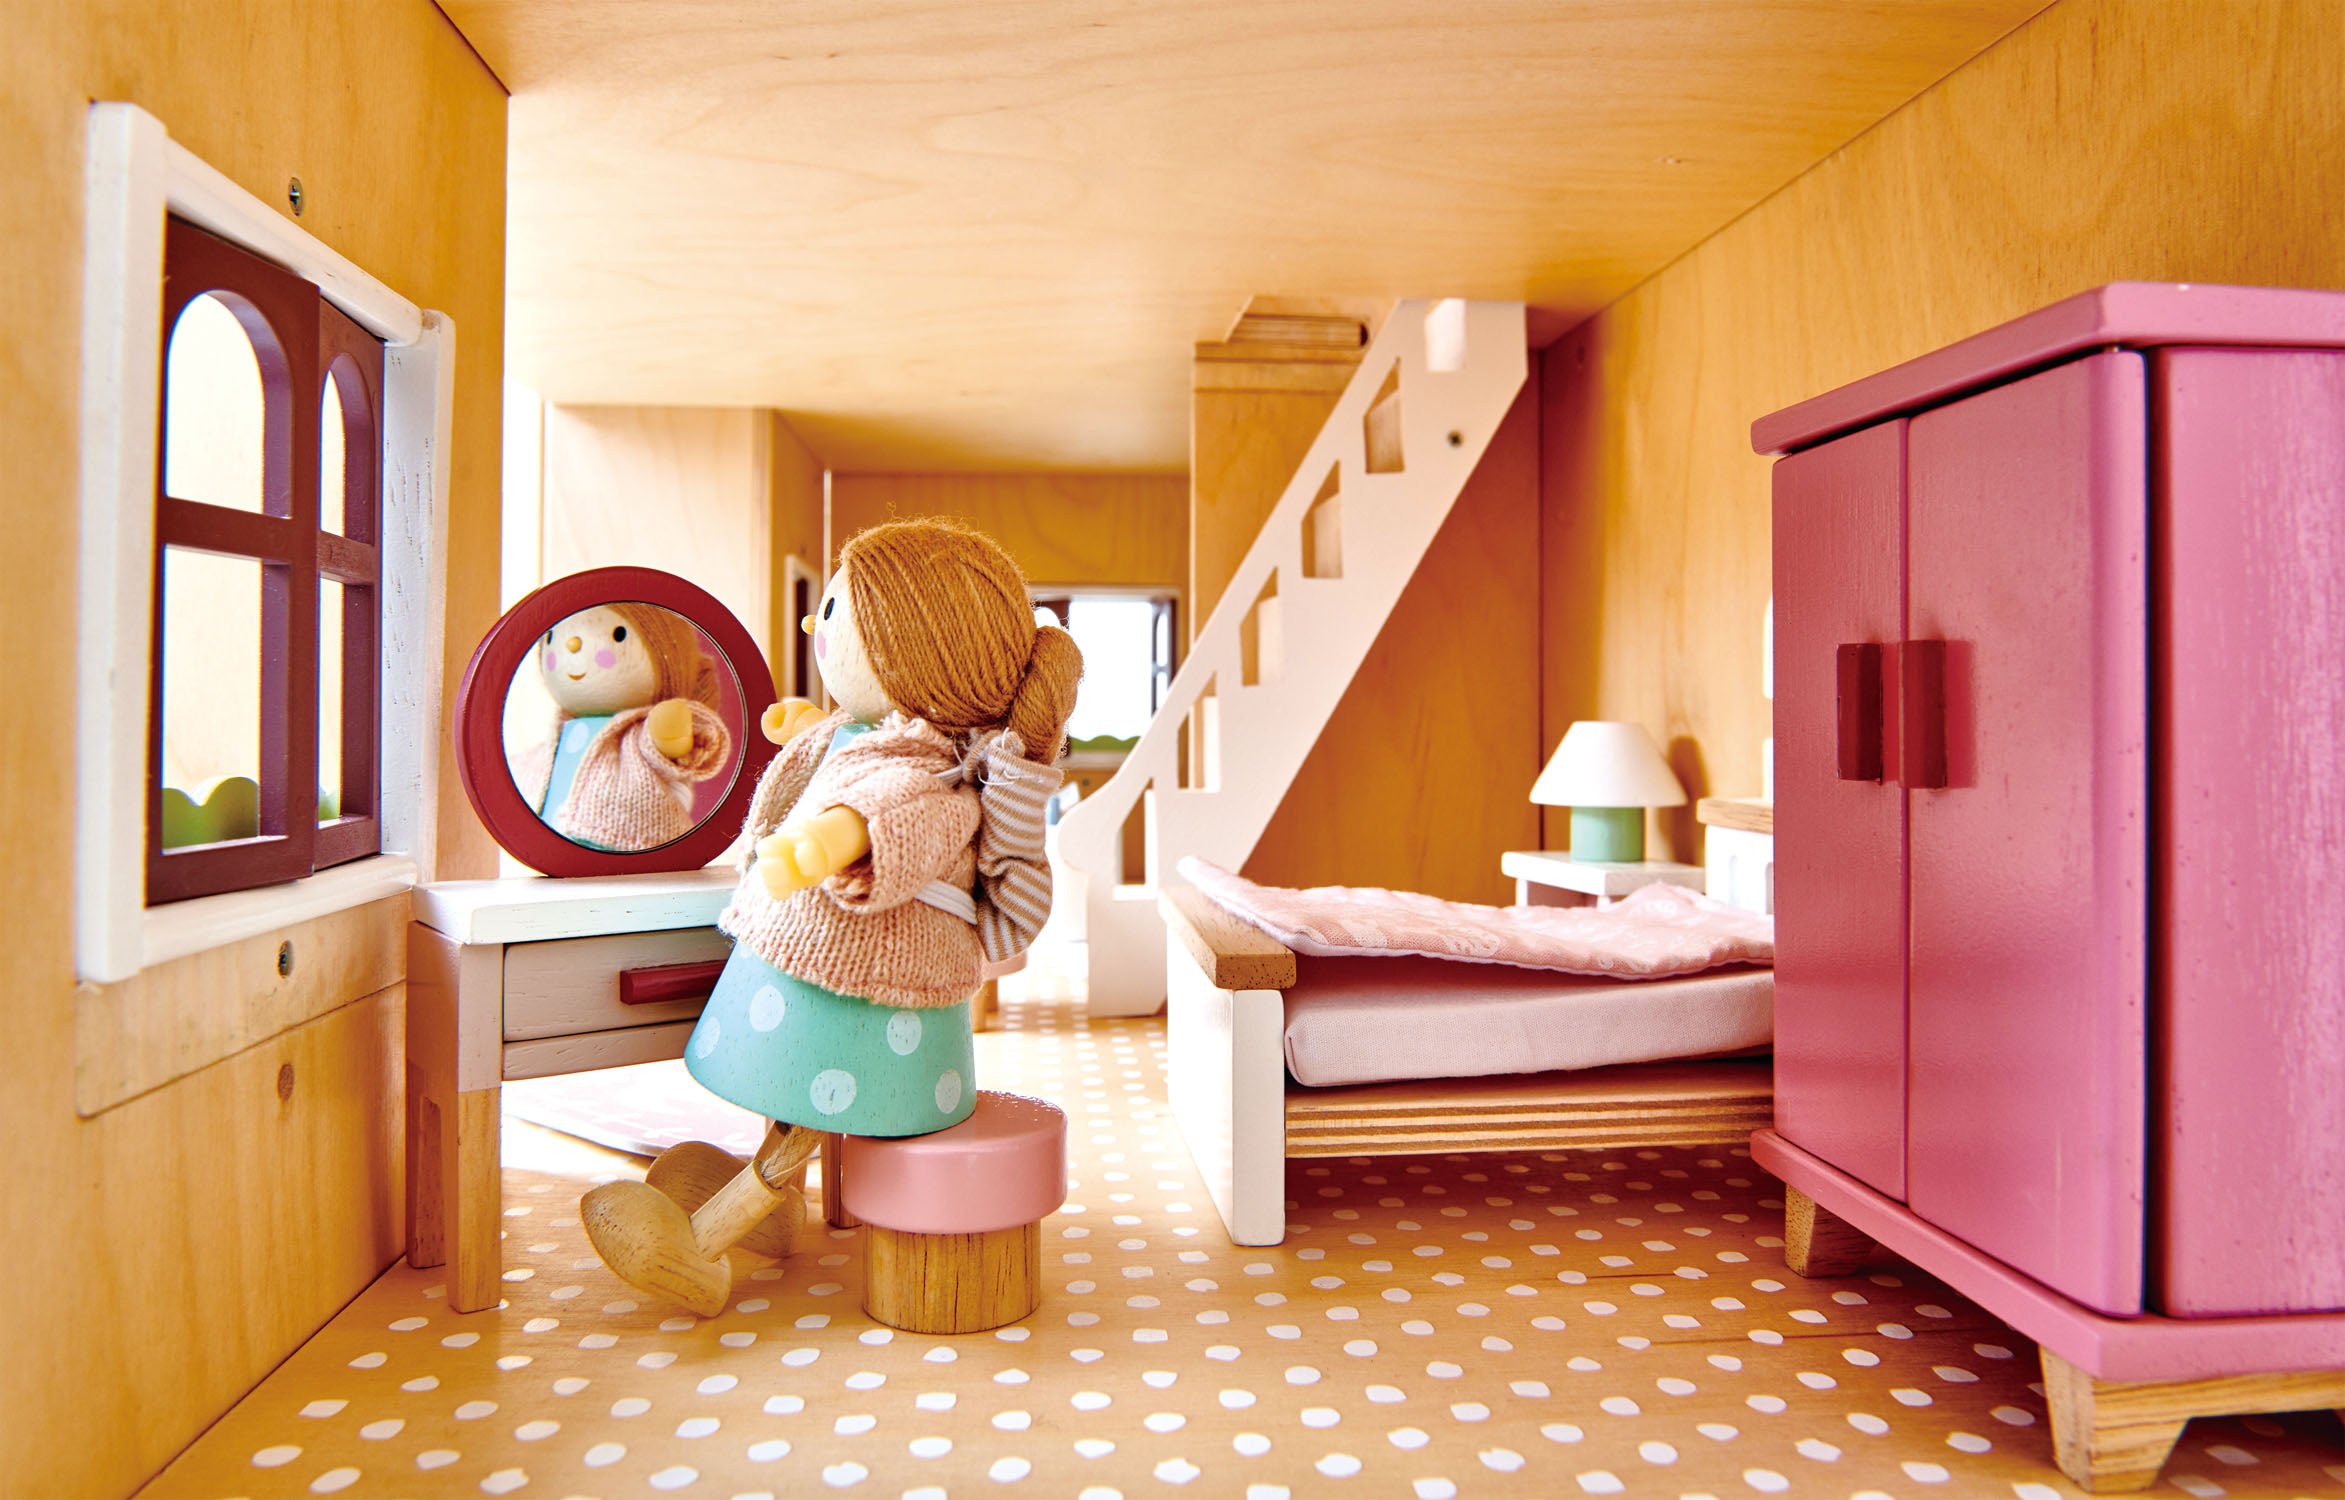 Wooden Wardrobe, 18-inch Dollhouse Furniture